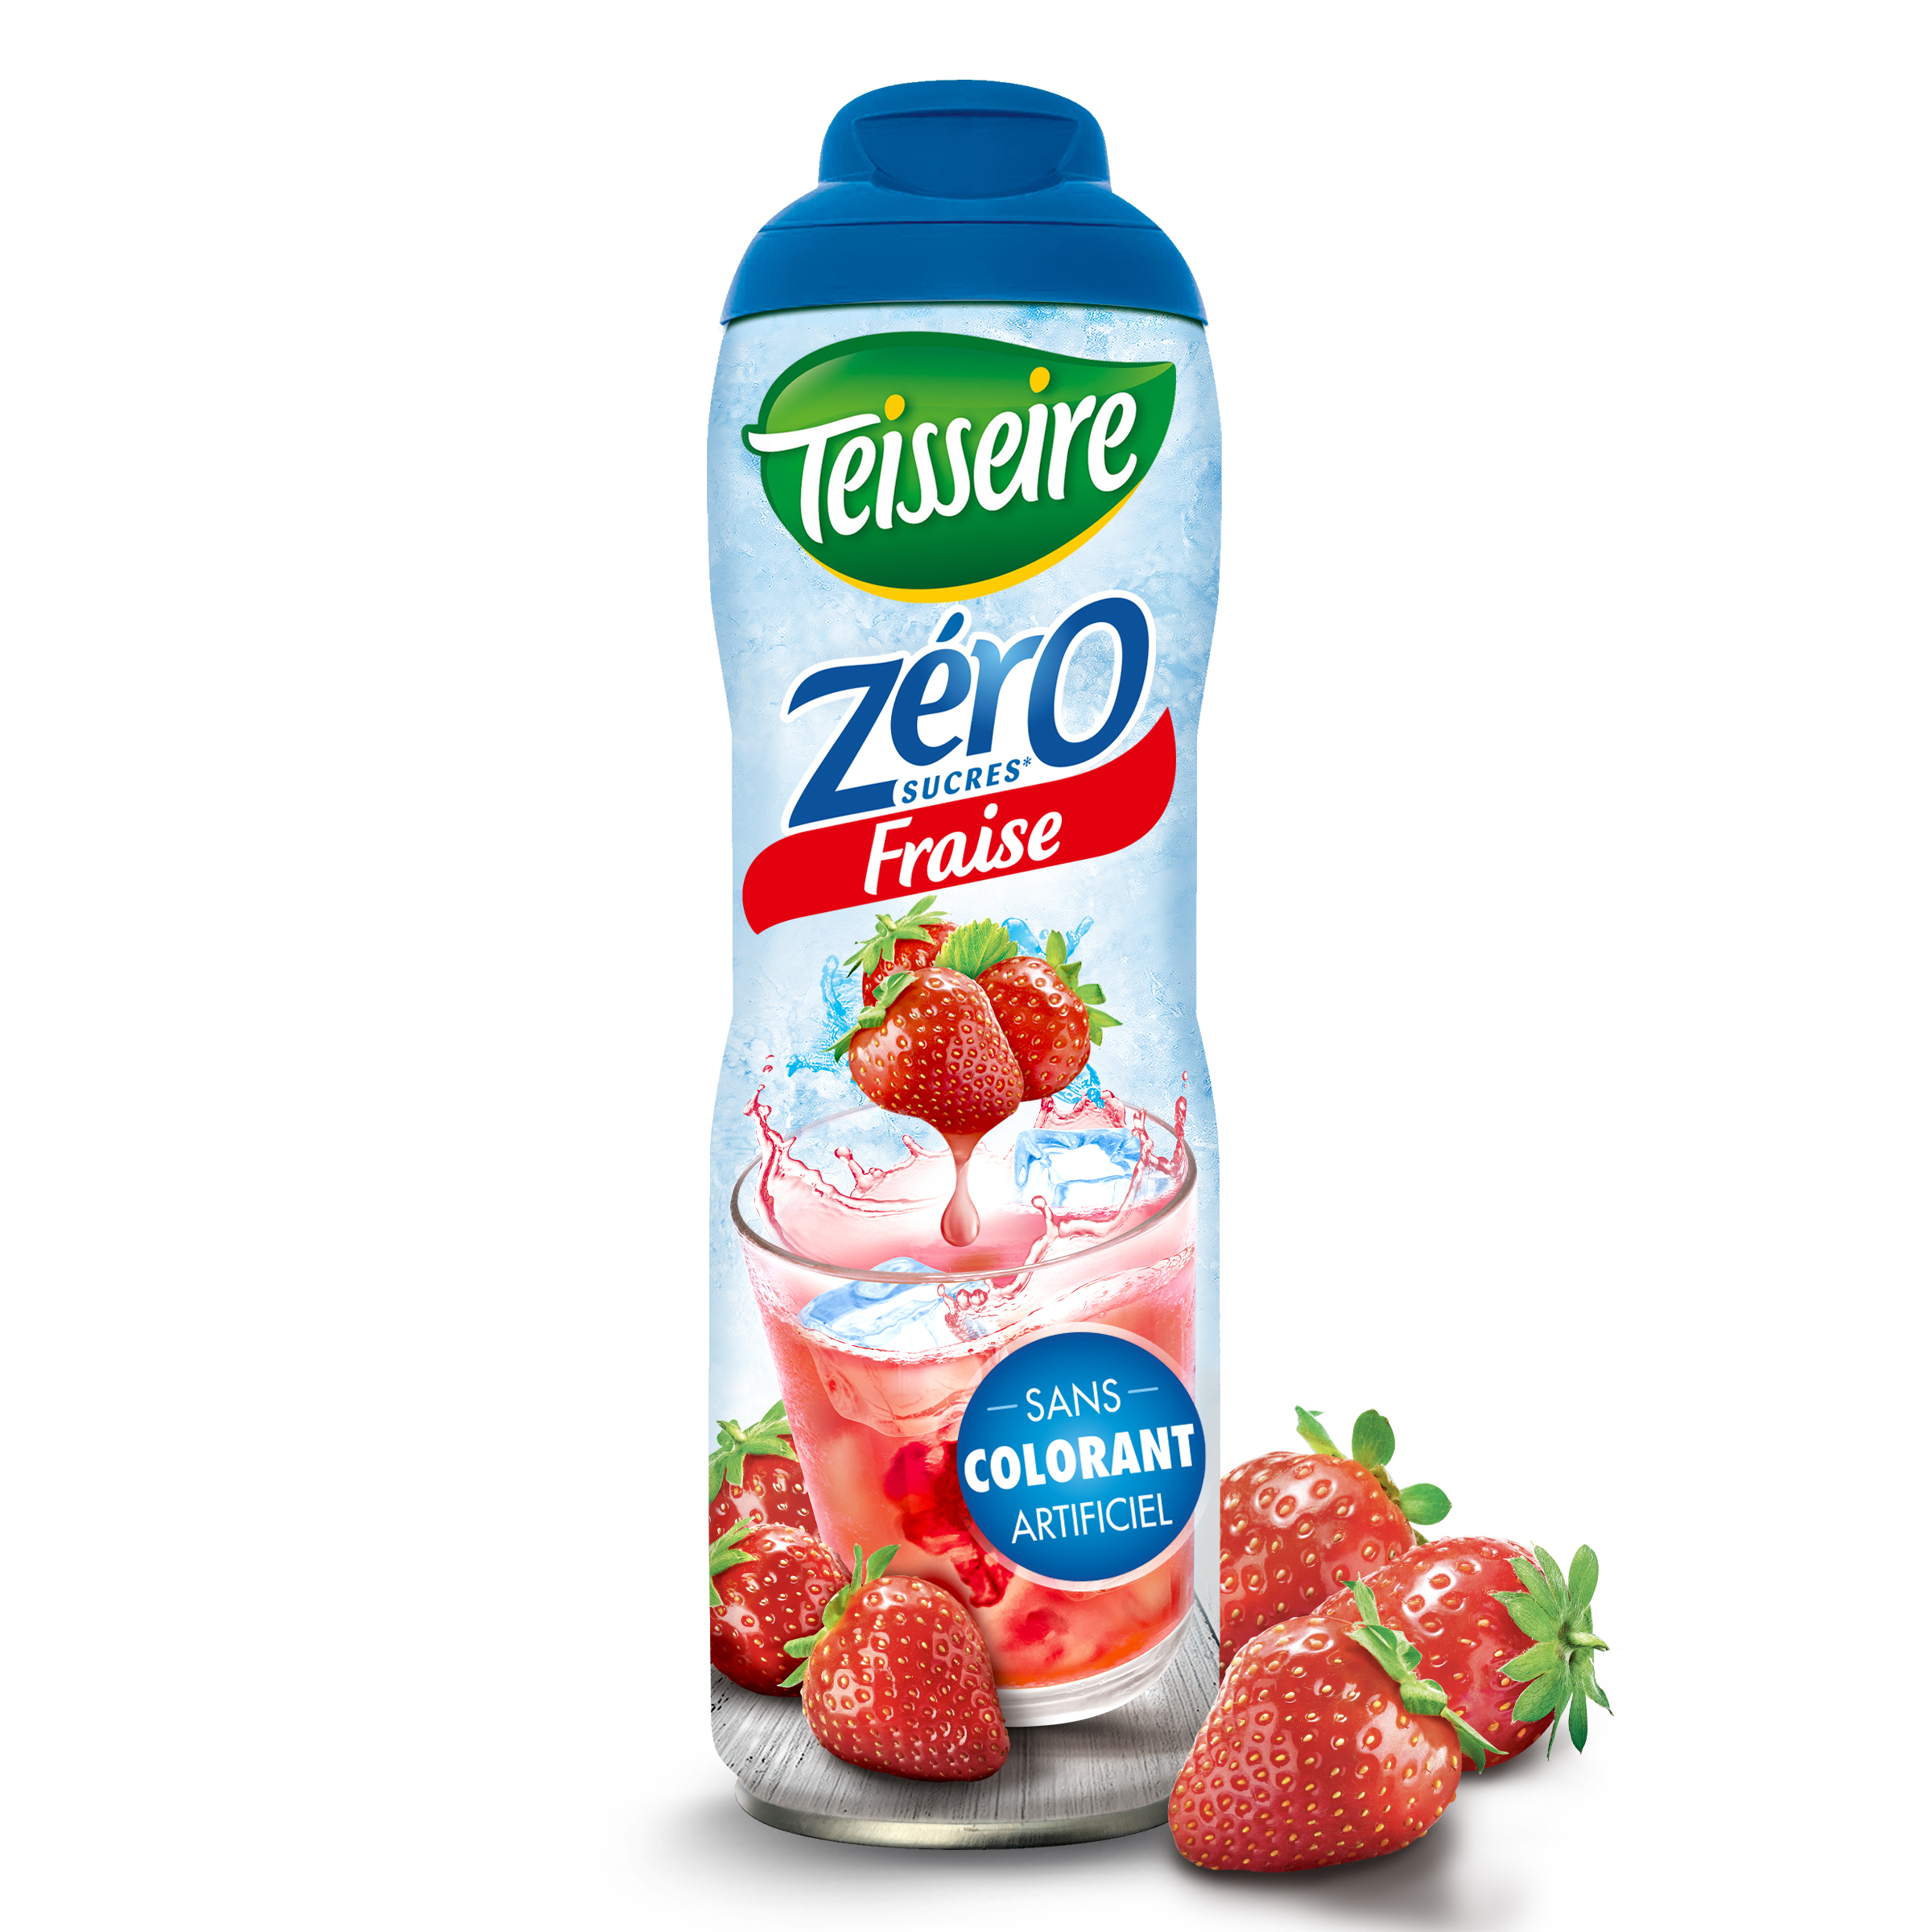 TEISSEIRE Sirop parfum fraise zéro sucre bidon 60cl pas cher 